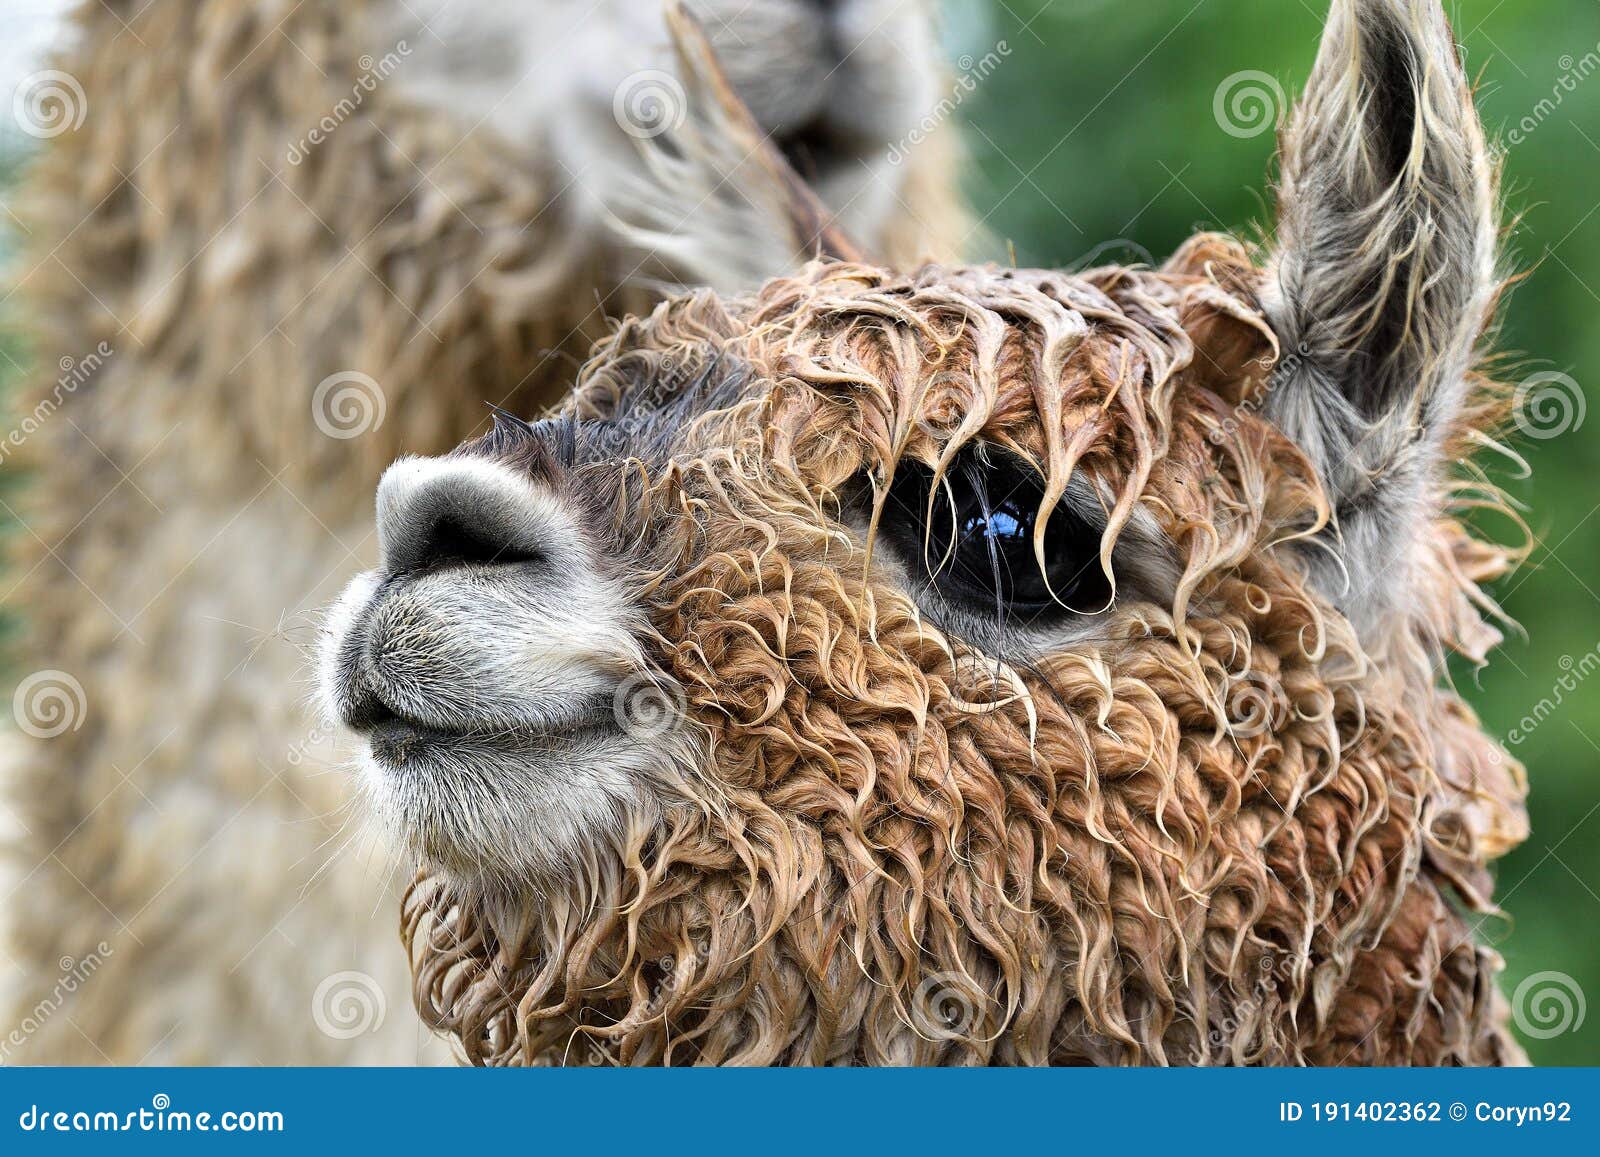 The Head of Small Cute Lama Alpaca. Wet Alpaca, Muzzle Detail. Smilling Furry  Animal Stock Photo - Image of happy, animal: 191402362